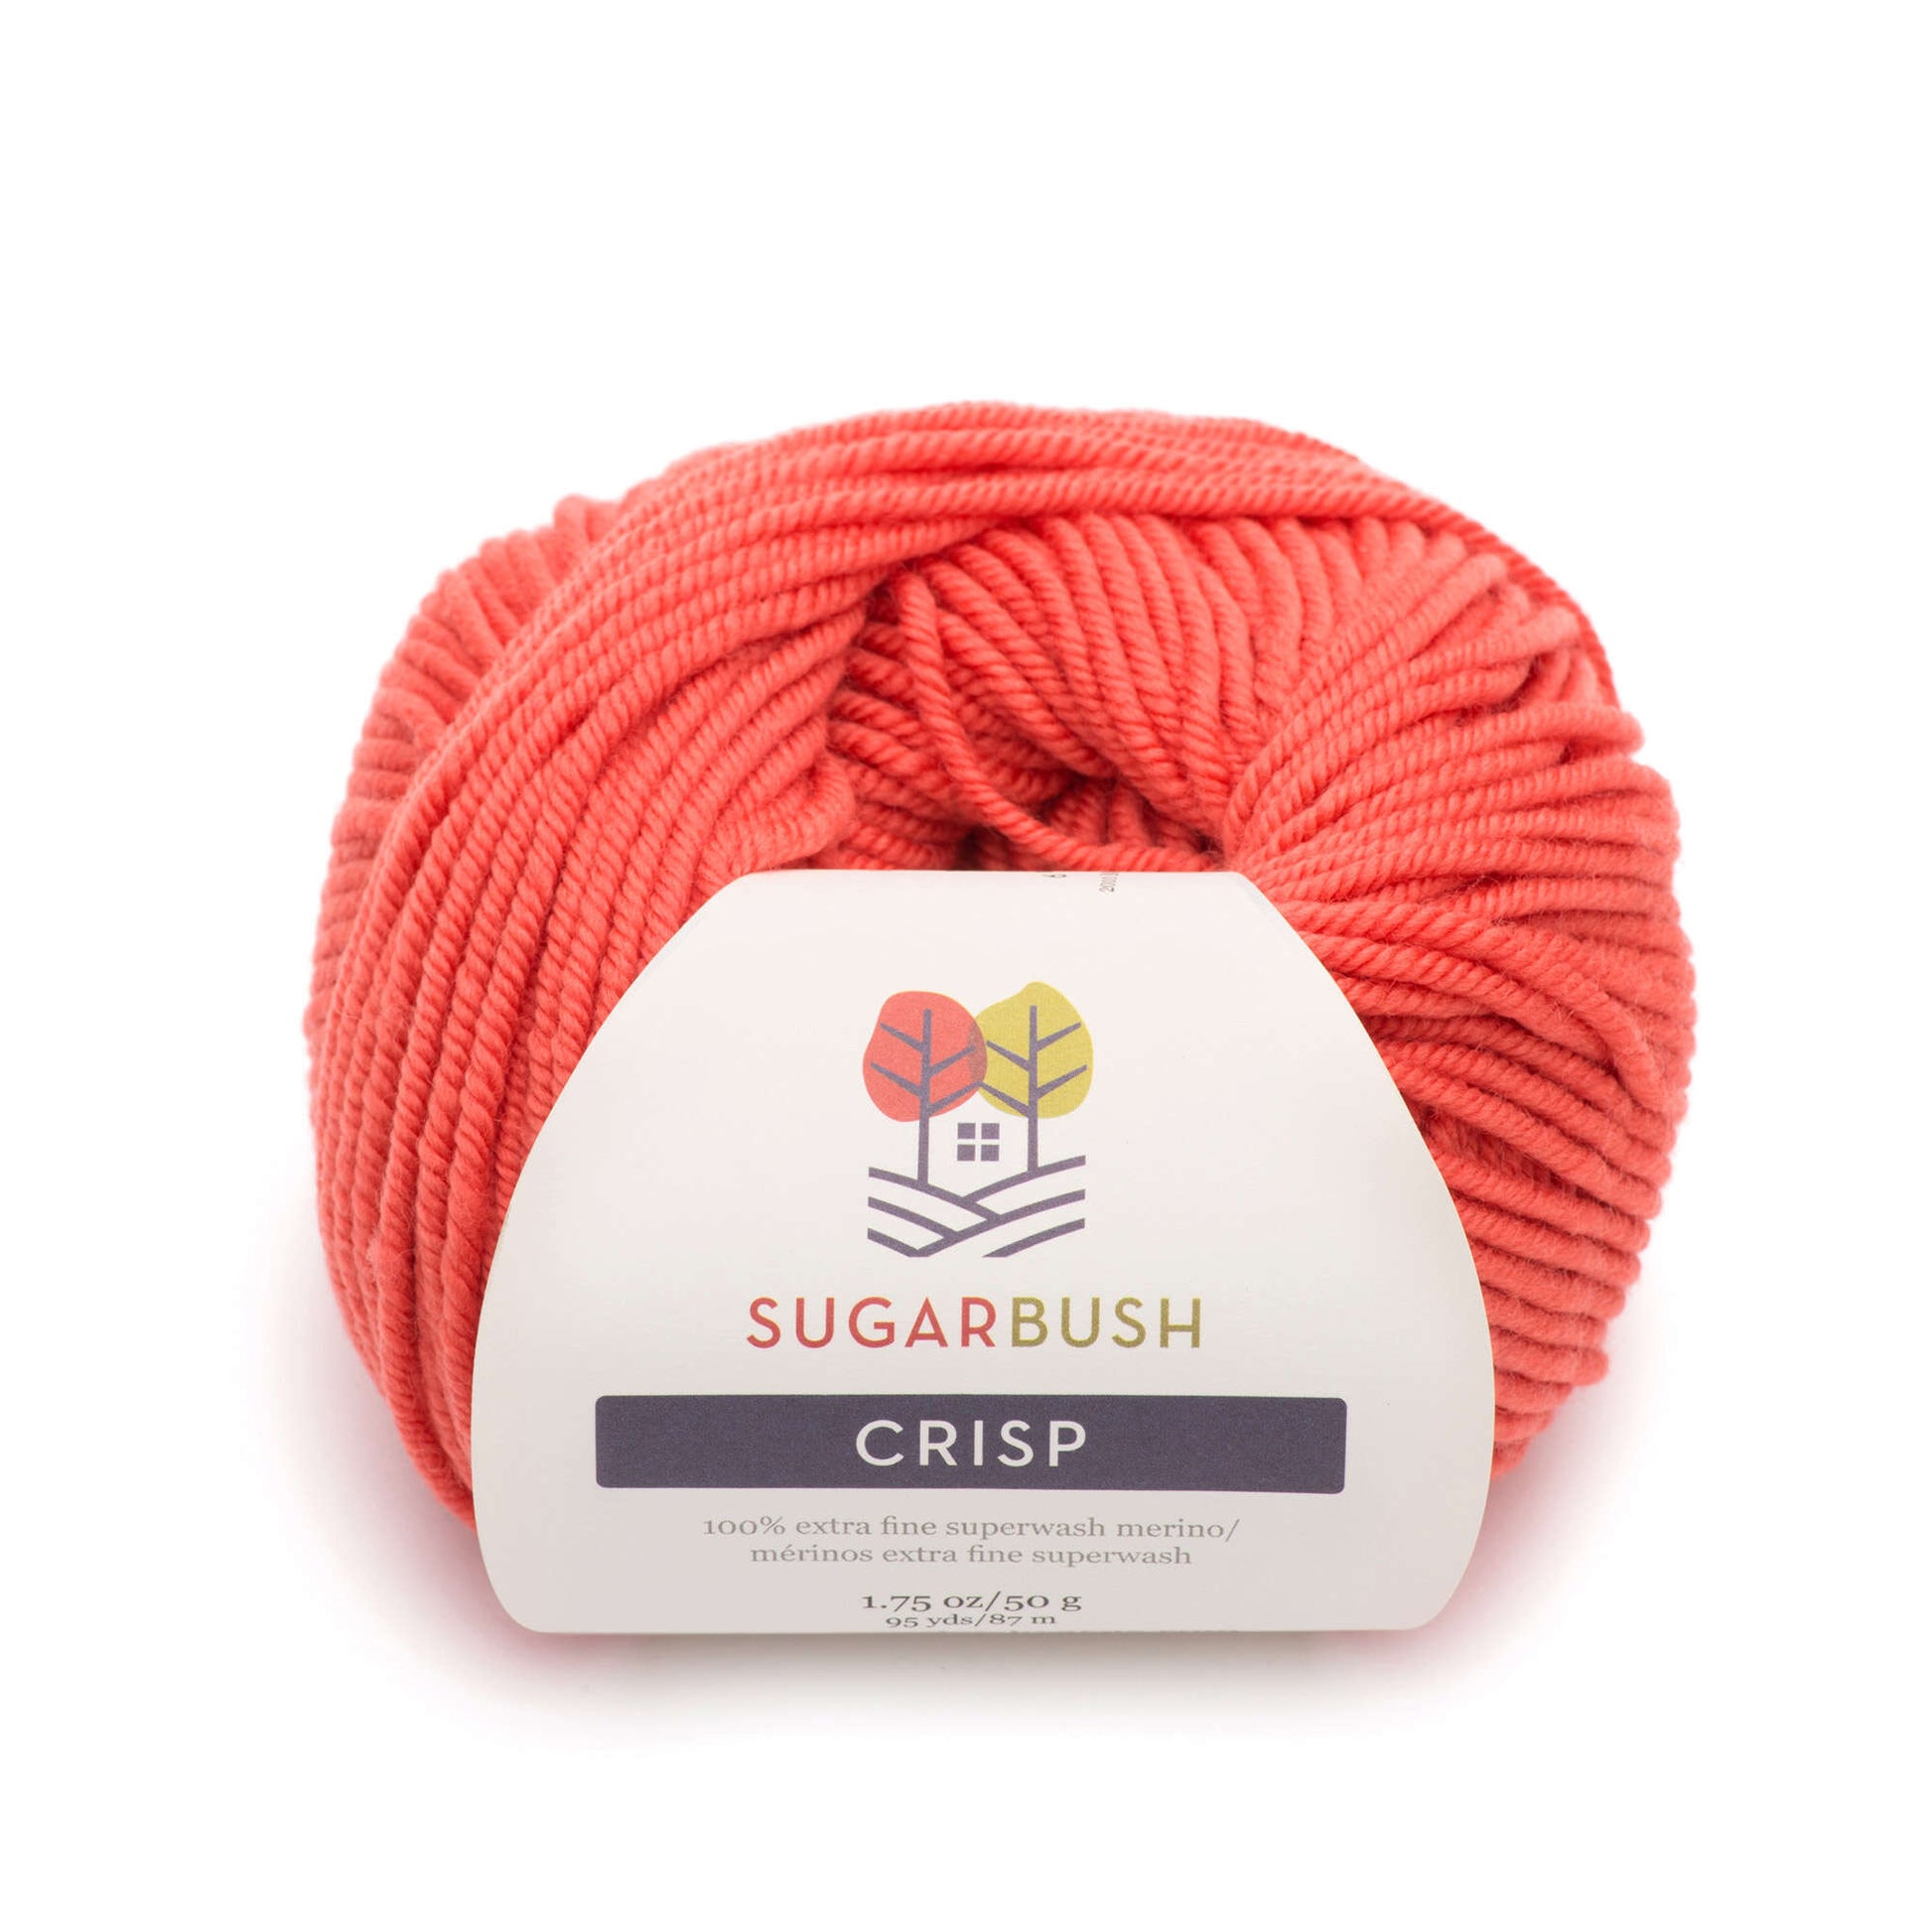 Sugar Bush Crisp Yarn - Discontinued Moncton Mango